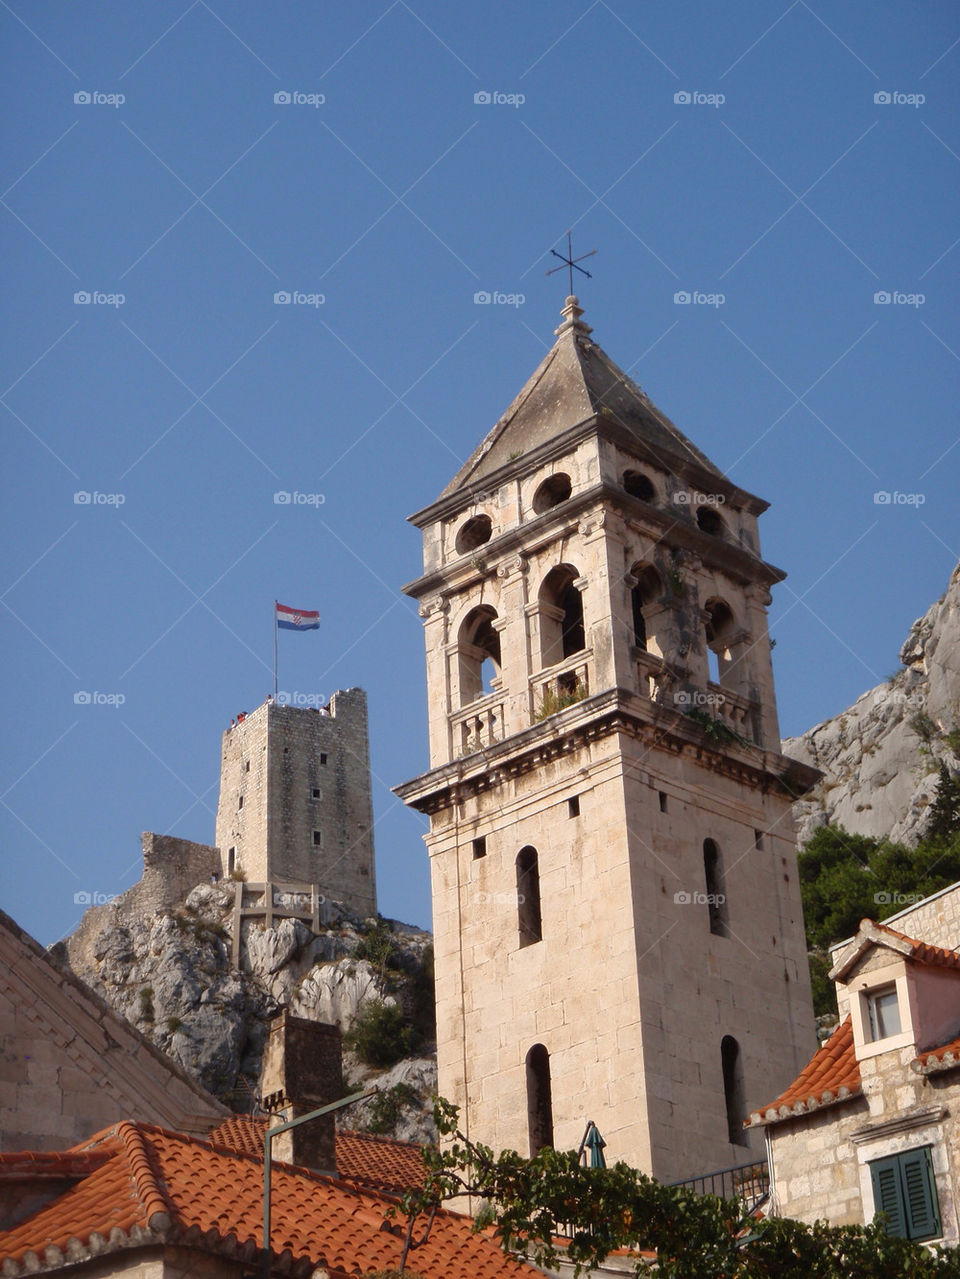 church old croatia castle by splicanka